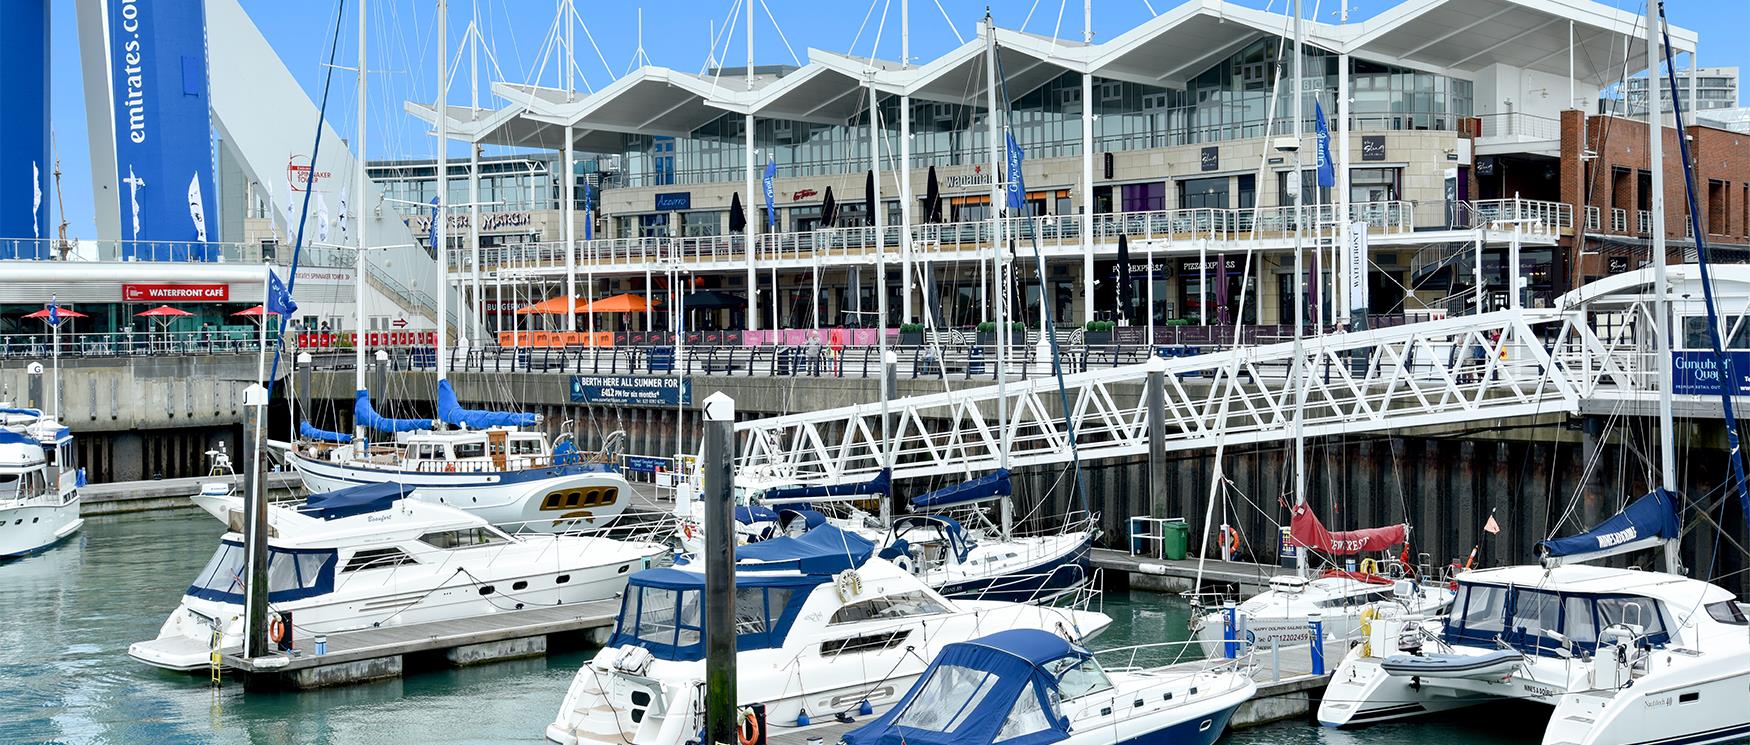 The Coastal City of Portsmouth